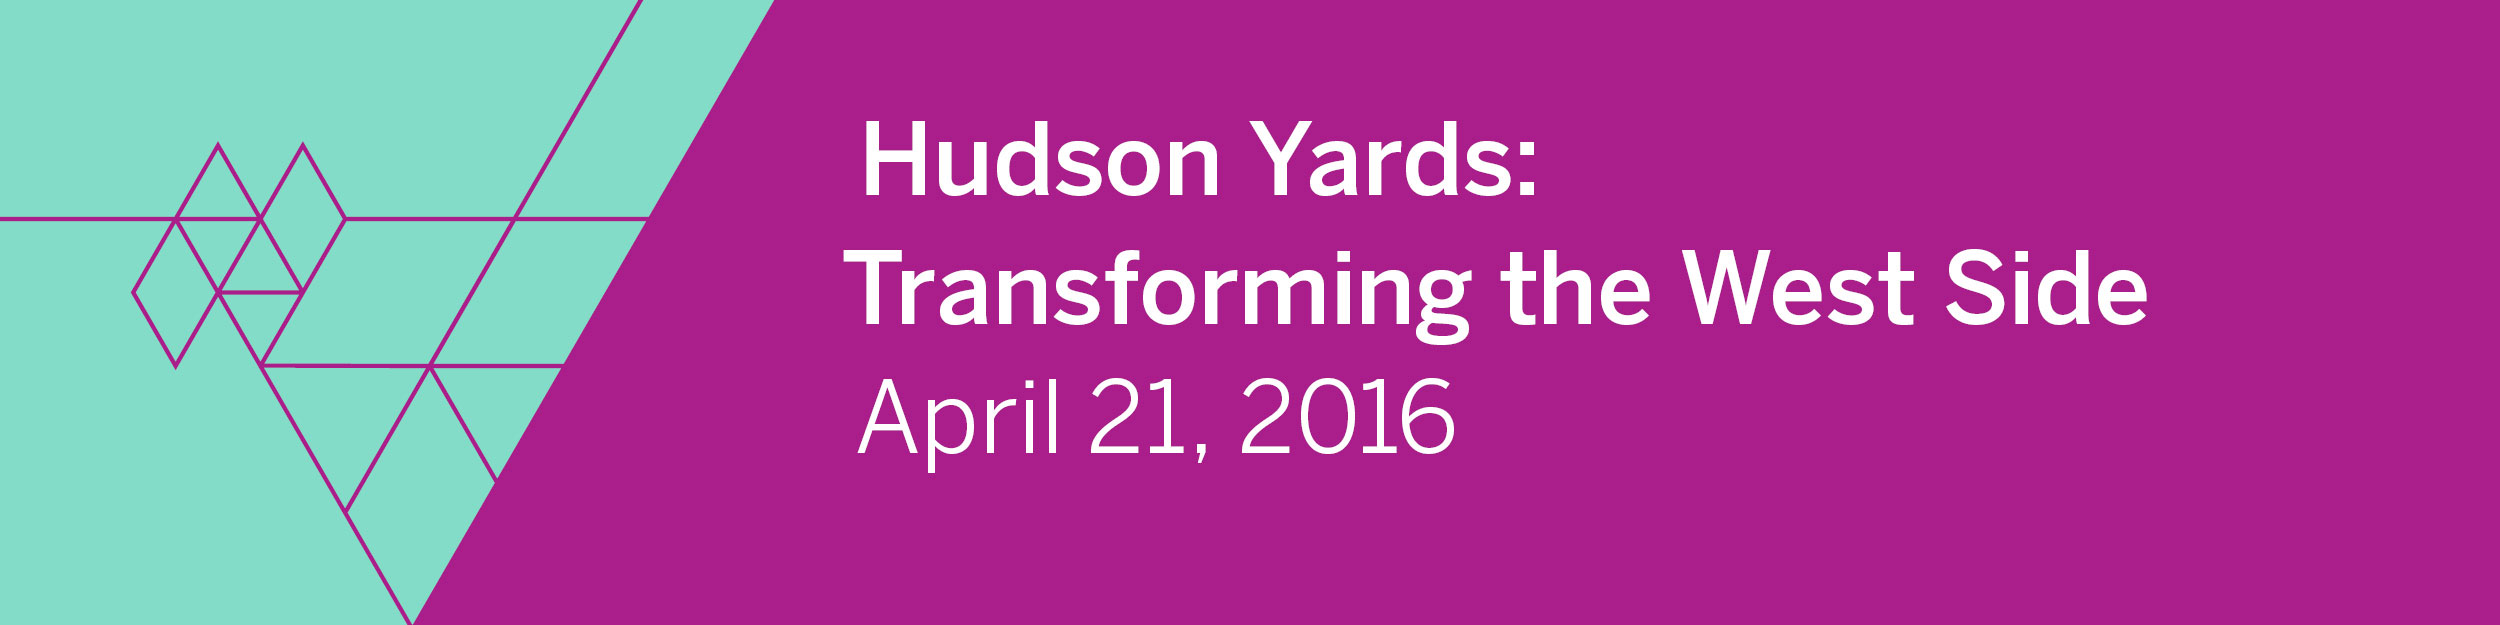 Hudson-Yards-Header_v2_web2